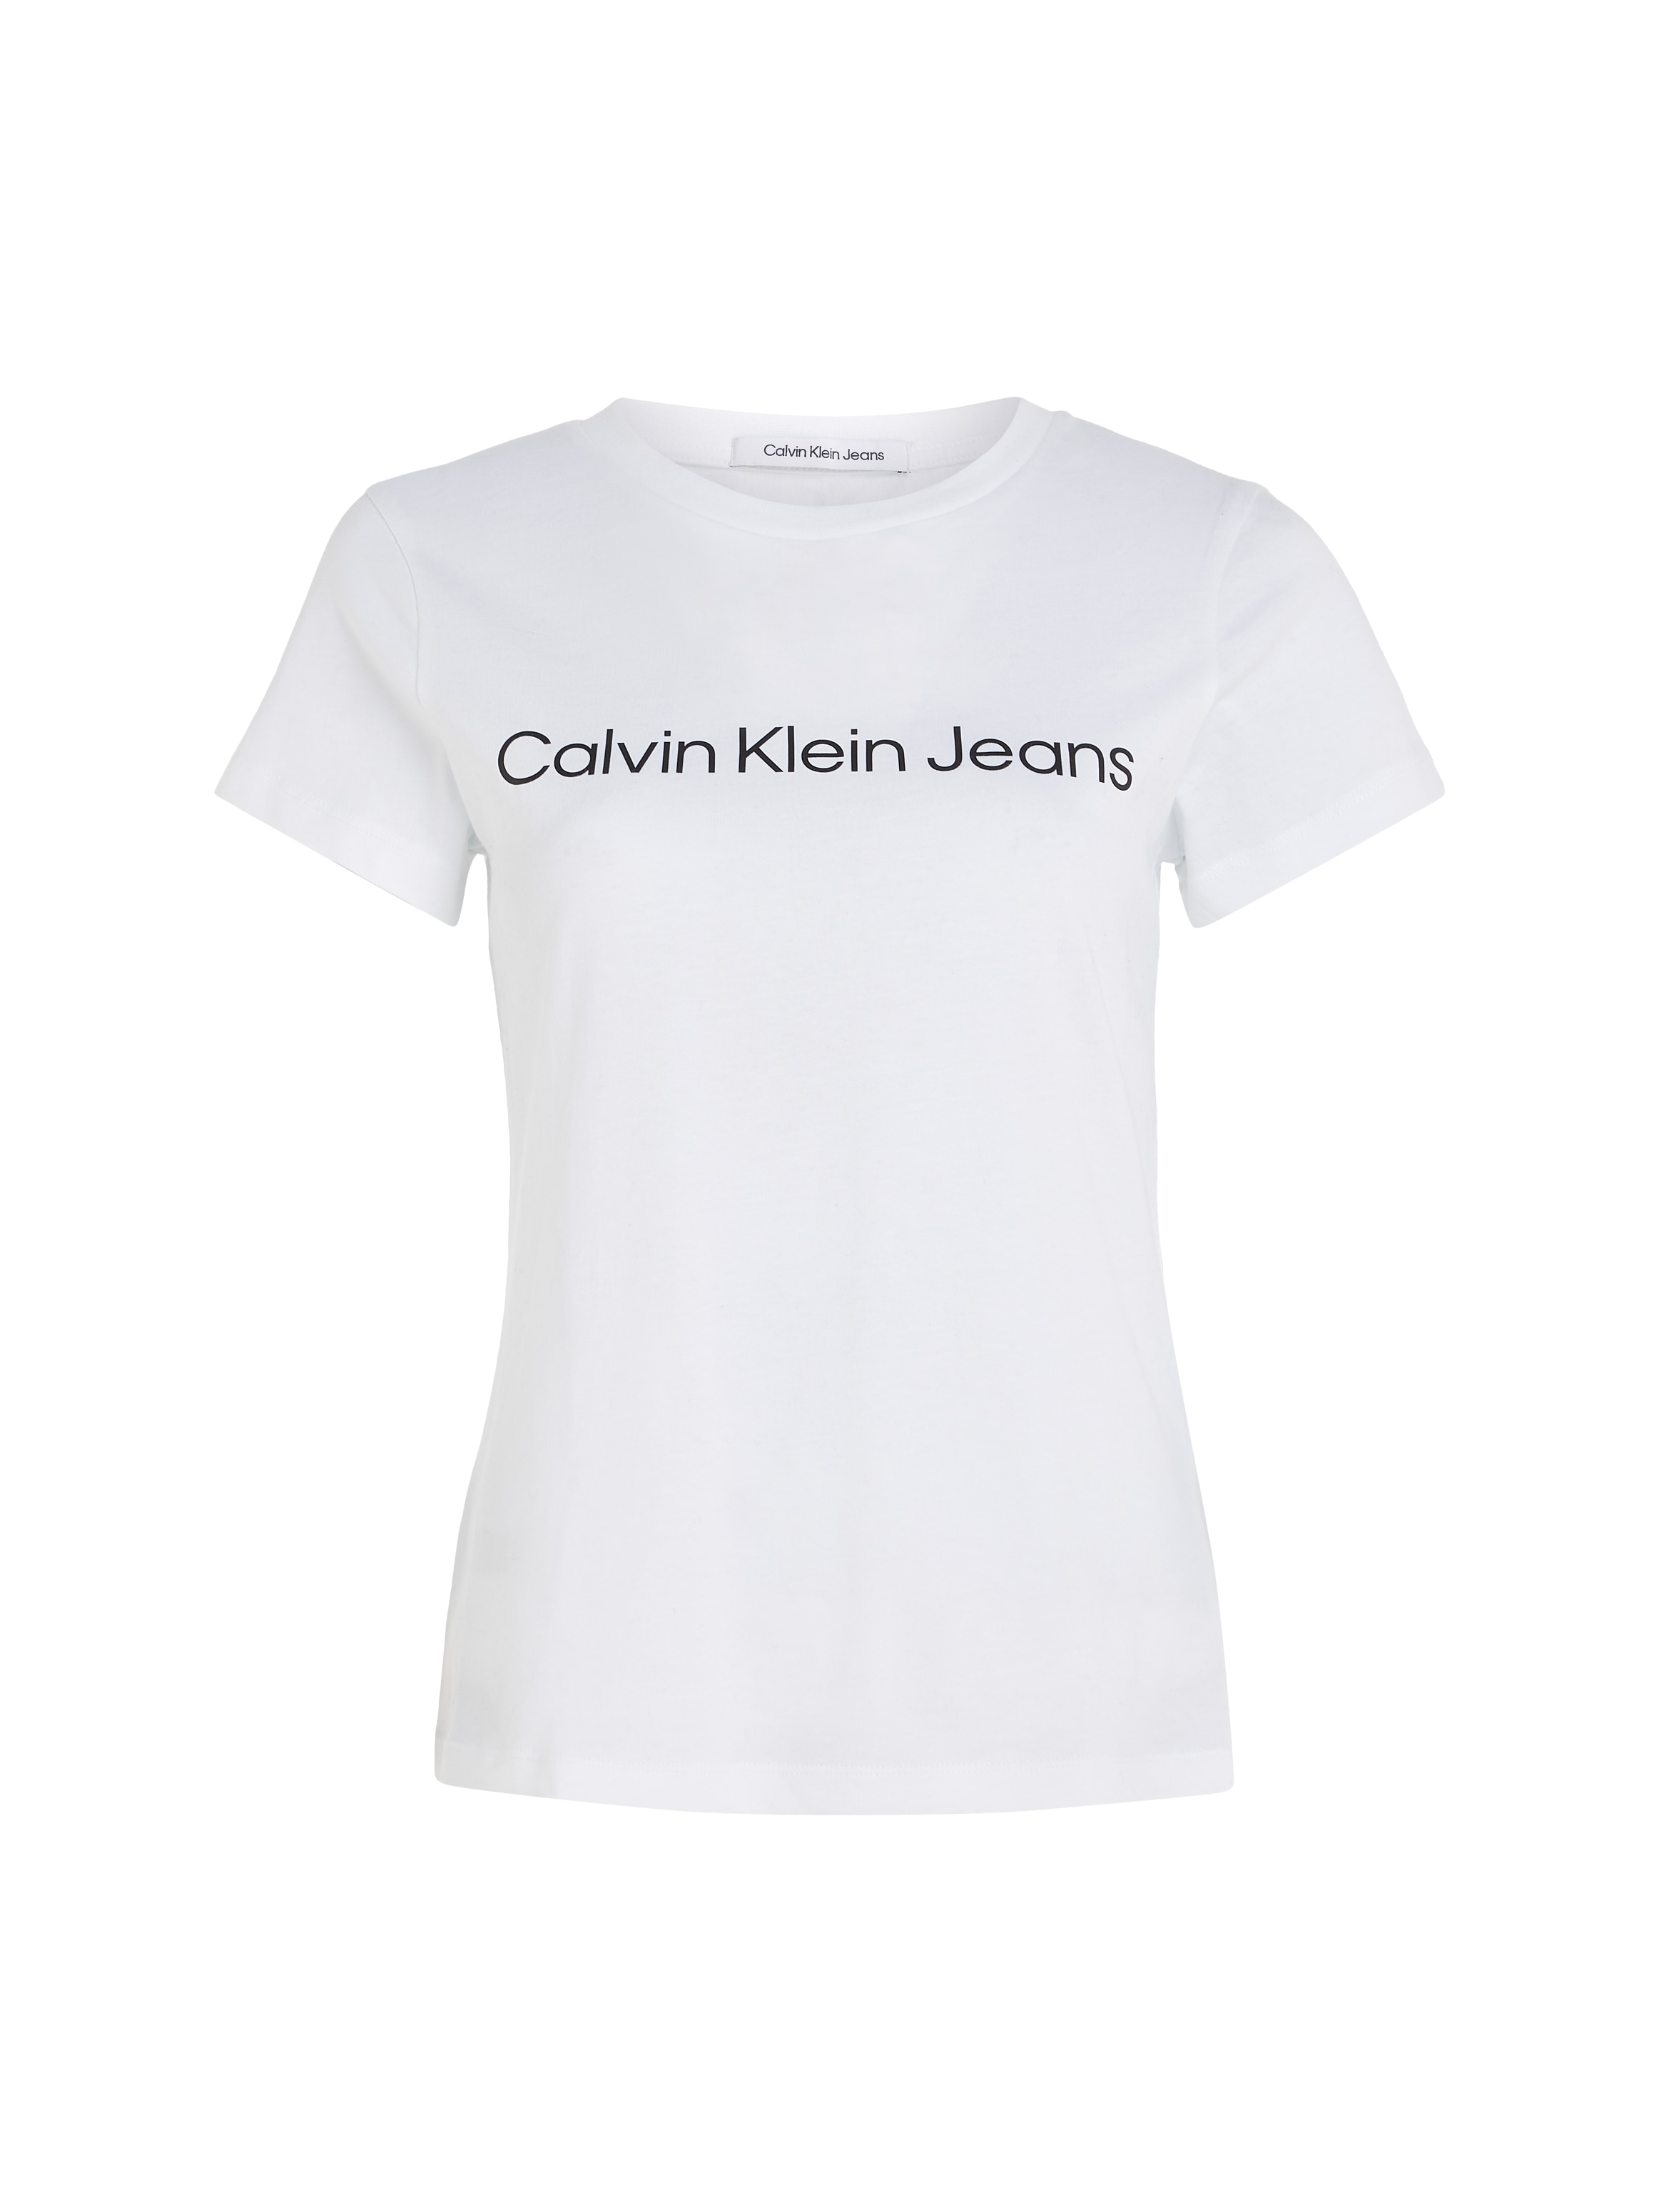 ♕ »CORE Logoschriftzug FIT Klein CK- bei SLIM LOGO mit T-Shirt TEE«, Jeans Calvin INSTIT